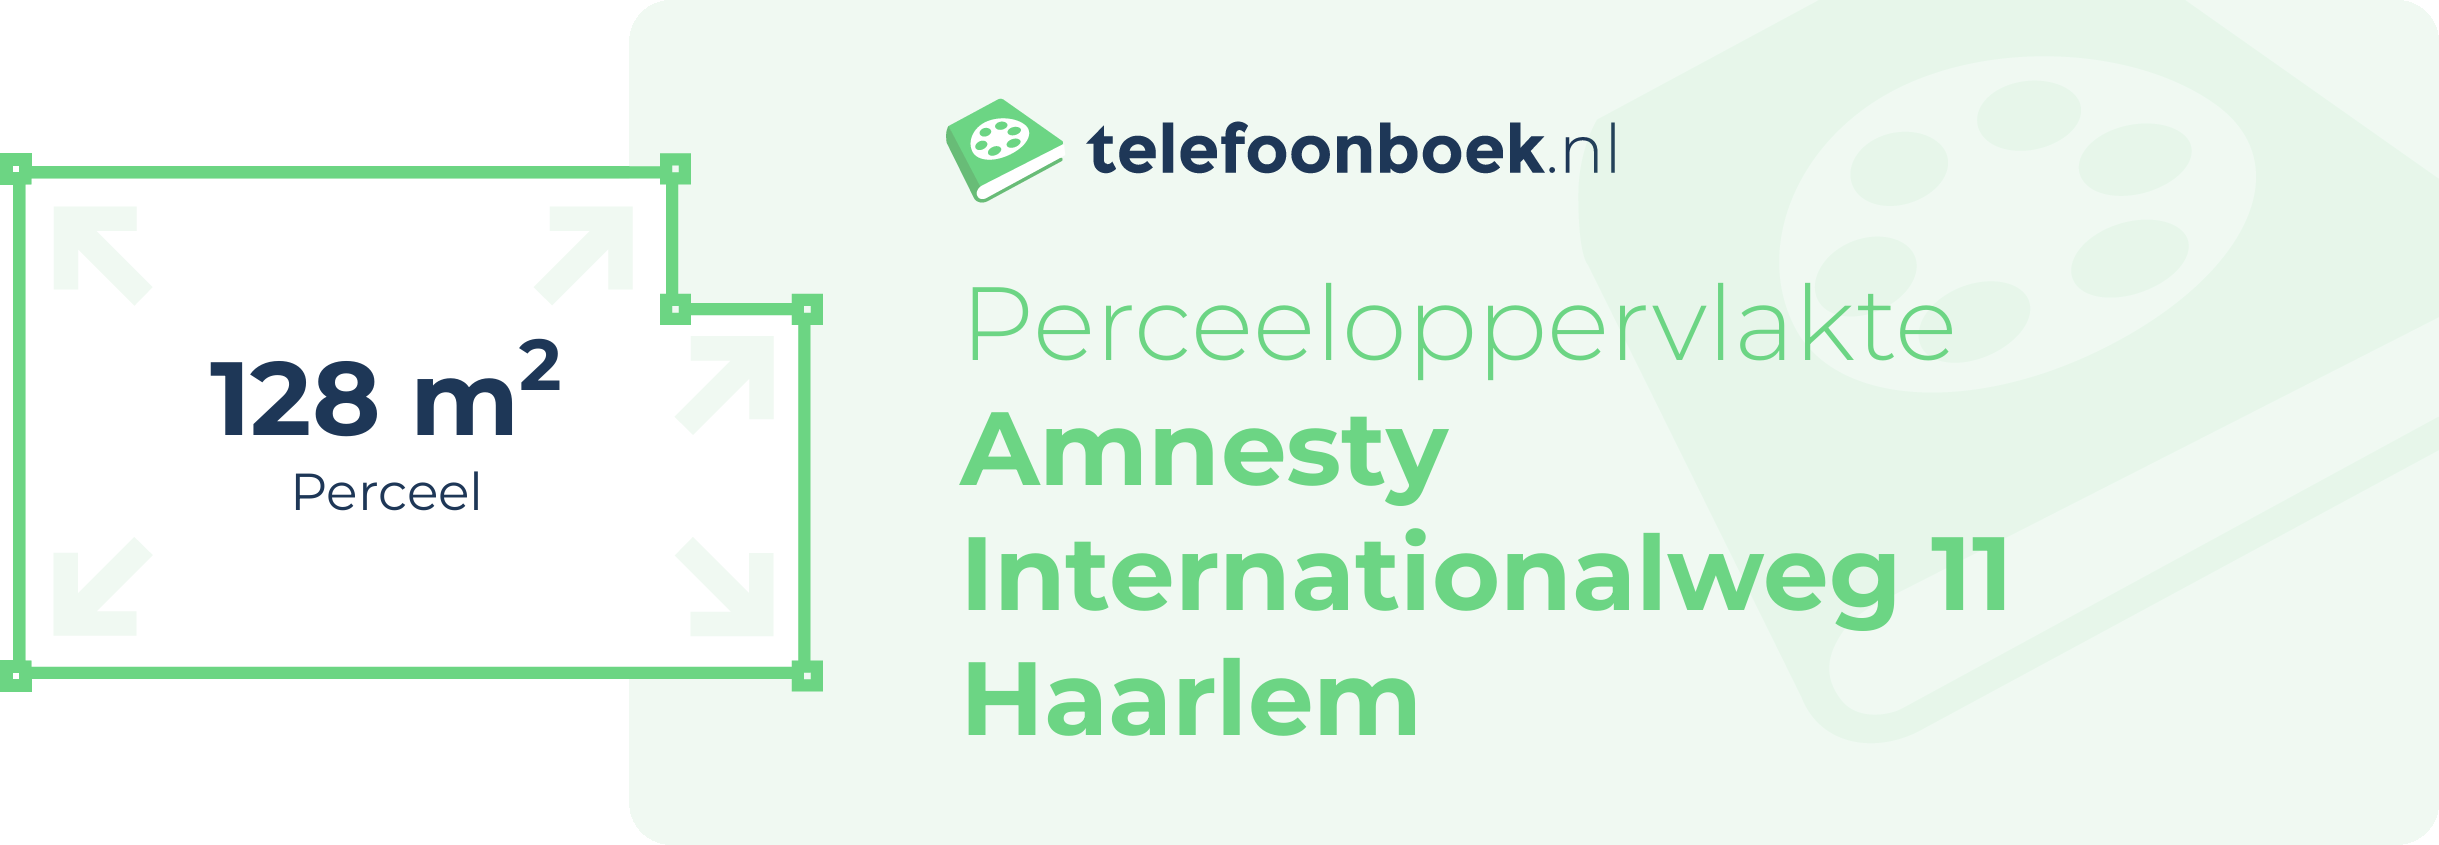 Perceeloppervlakte Amnesty Internationalweg 11 Haarlem